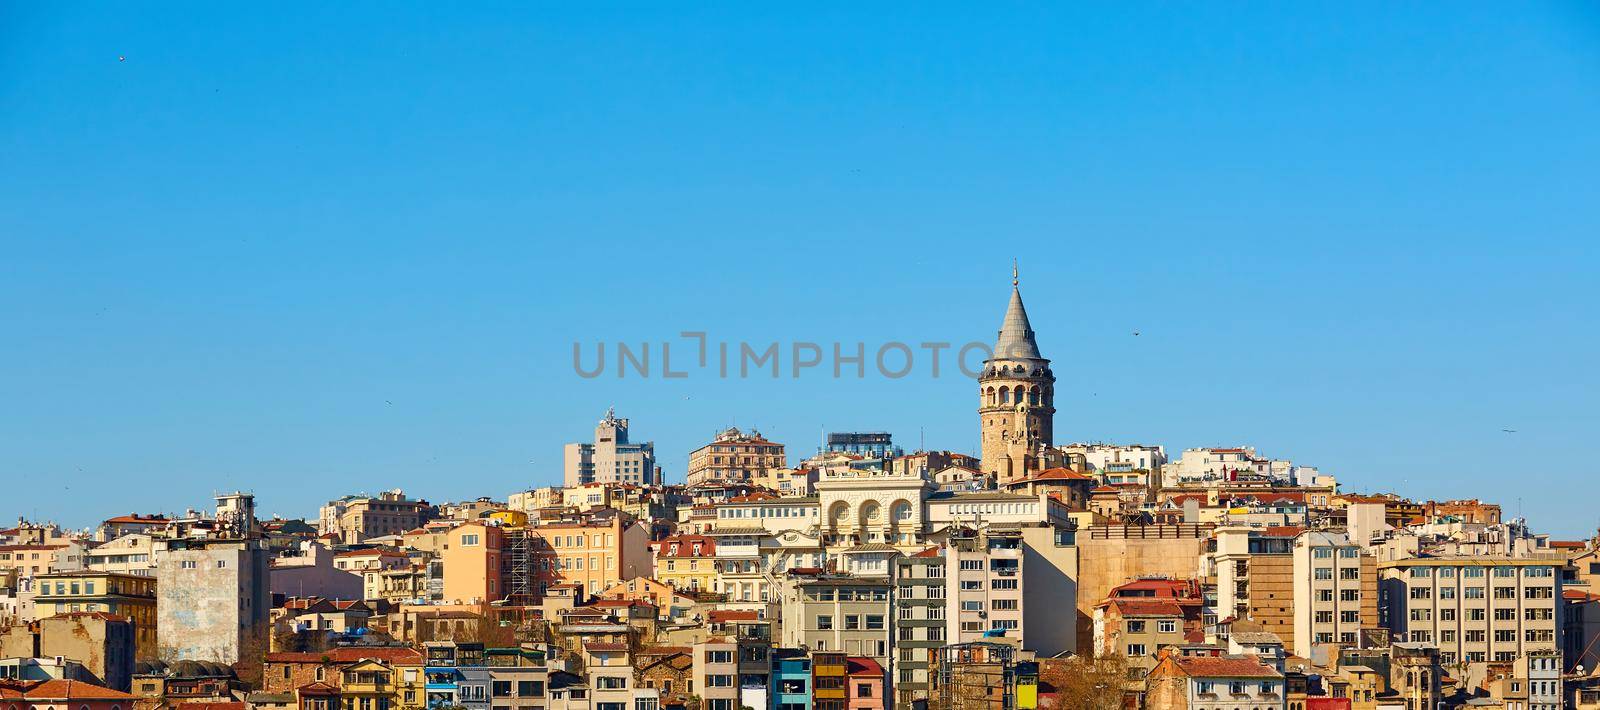 Beyoglu district historic architecture and Galata tower medieval landmark in Istanbul, Turkey.